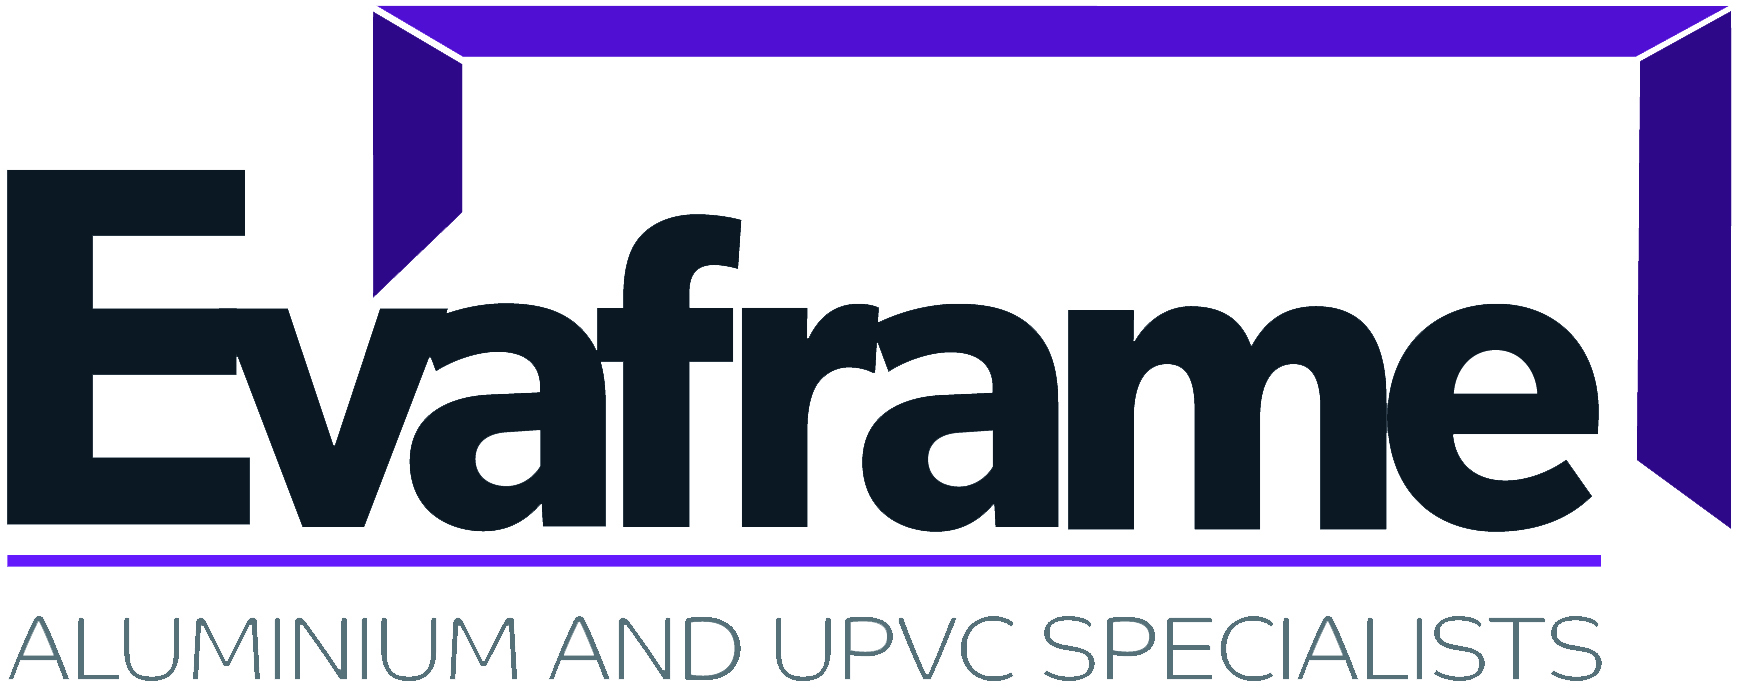 Evaframe logo